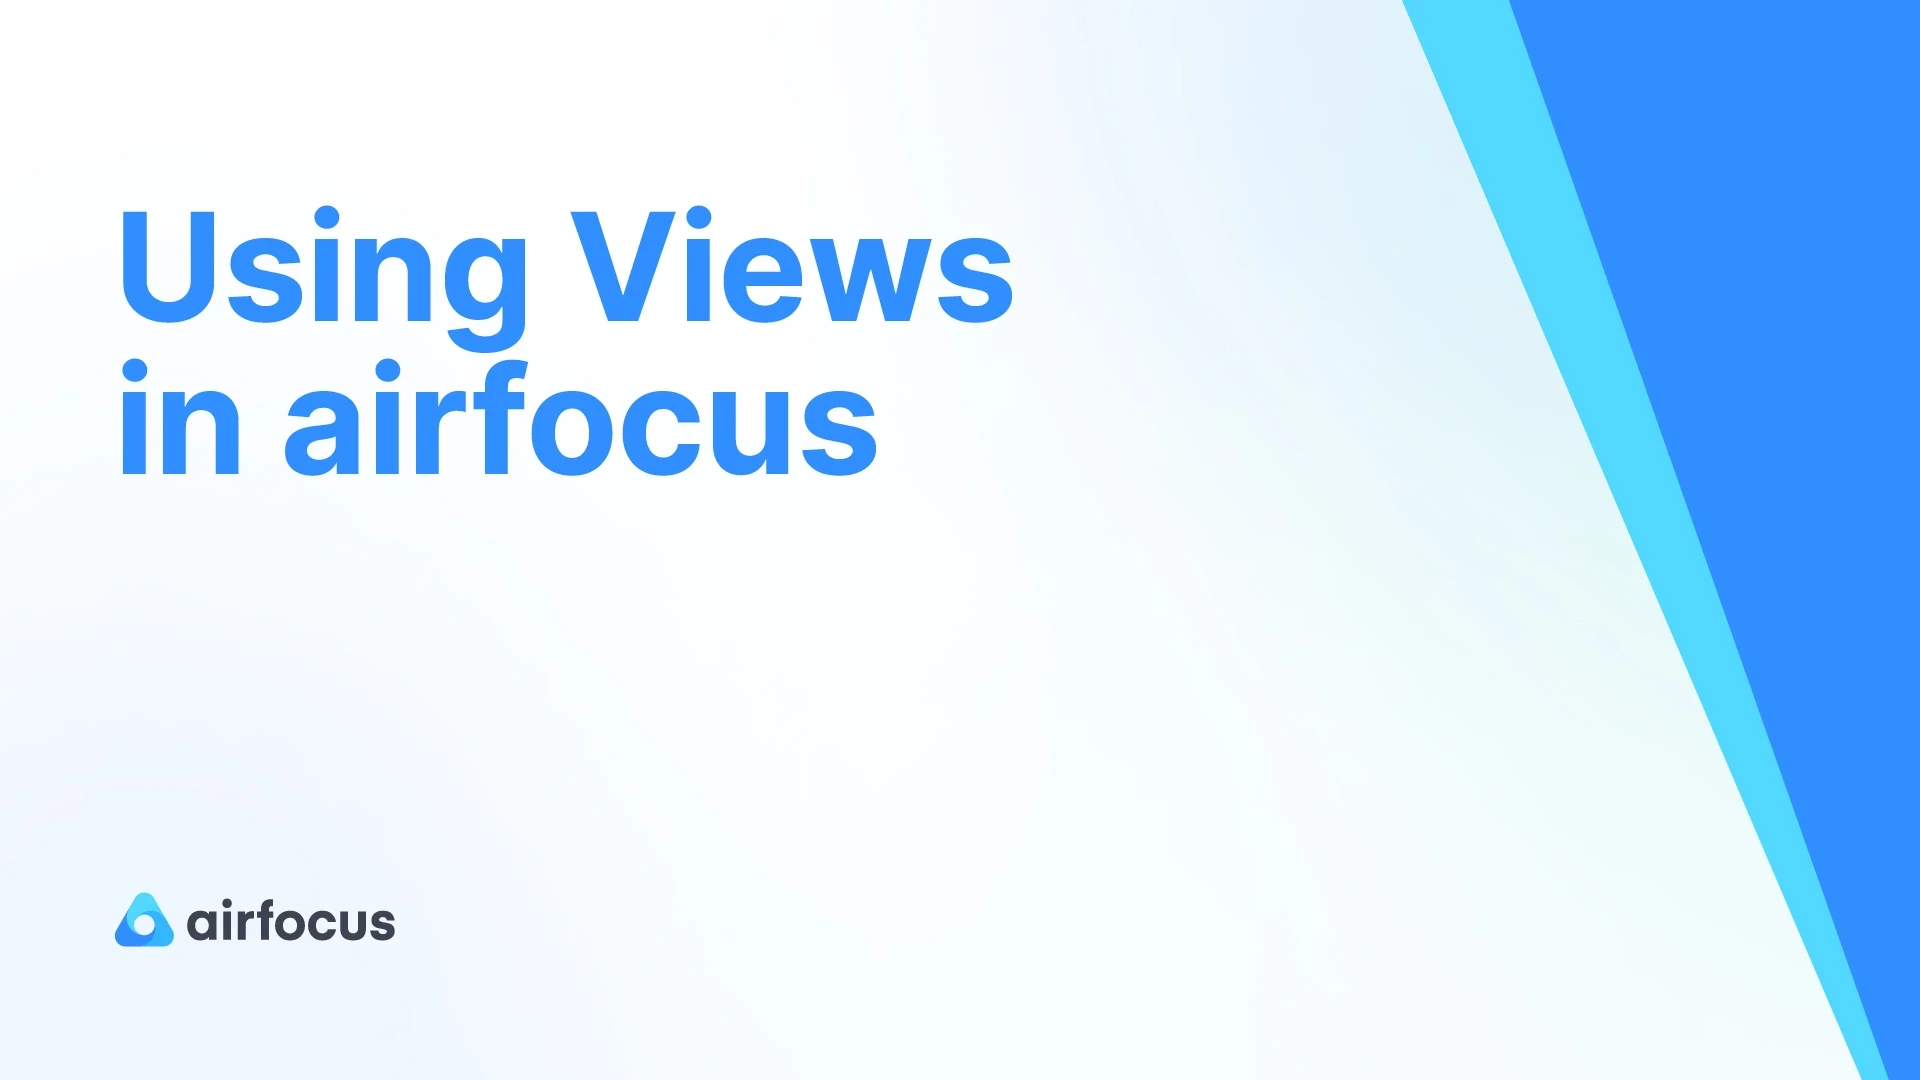 Using Views in airfocus